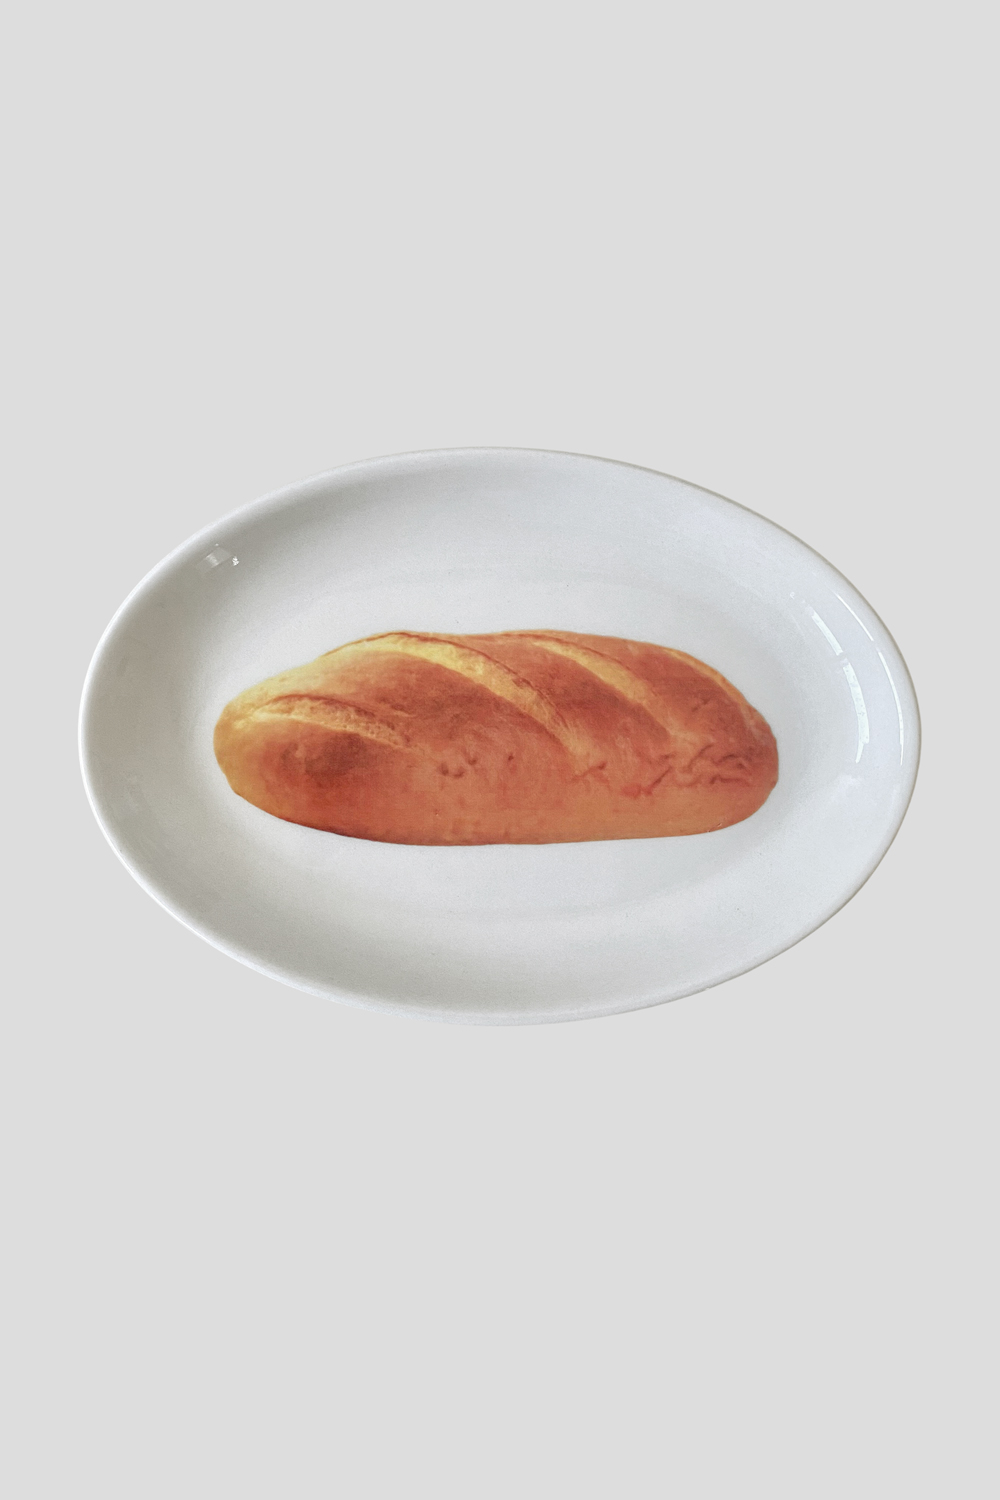 yesceramic, Bread oval dish, 타원형접시, 빵, 예스세라믹, 비애티튜드